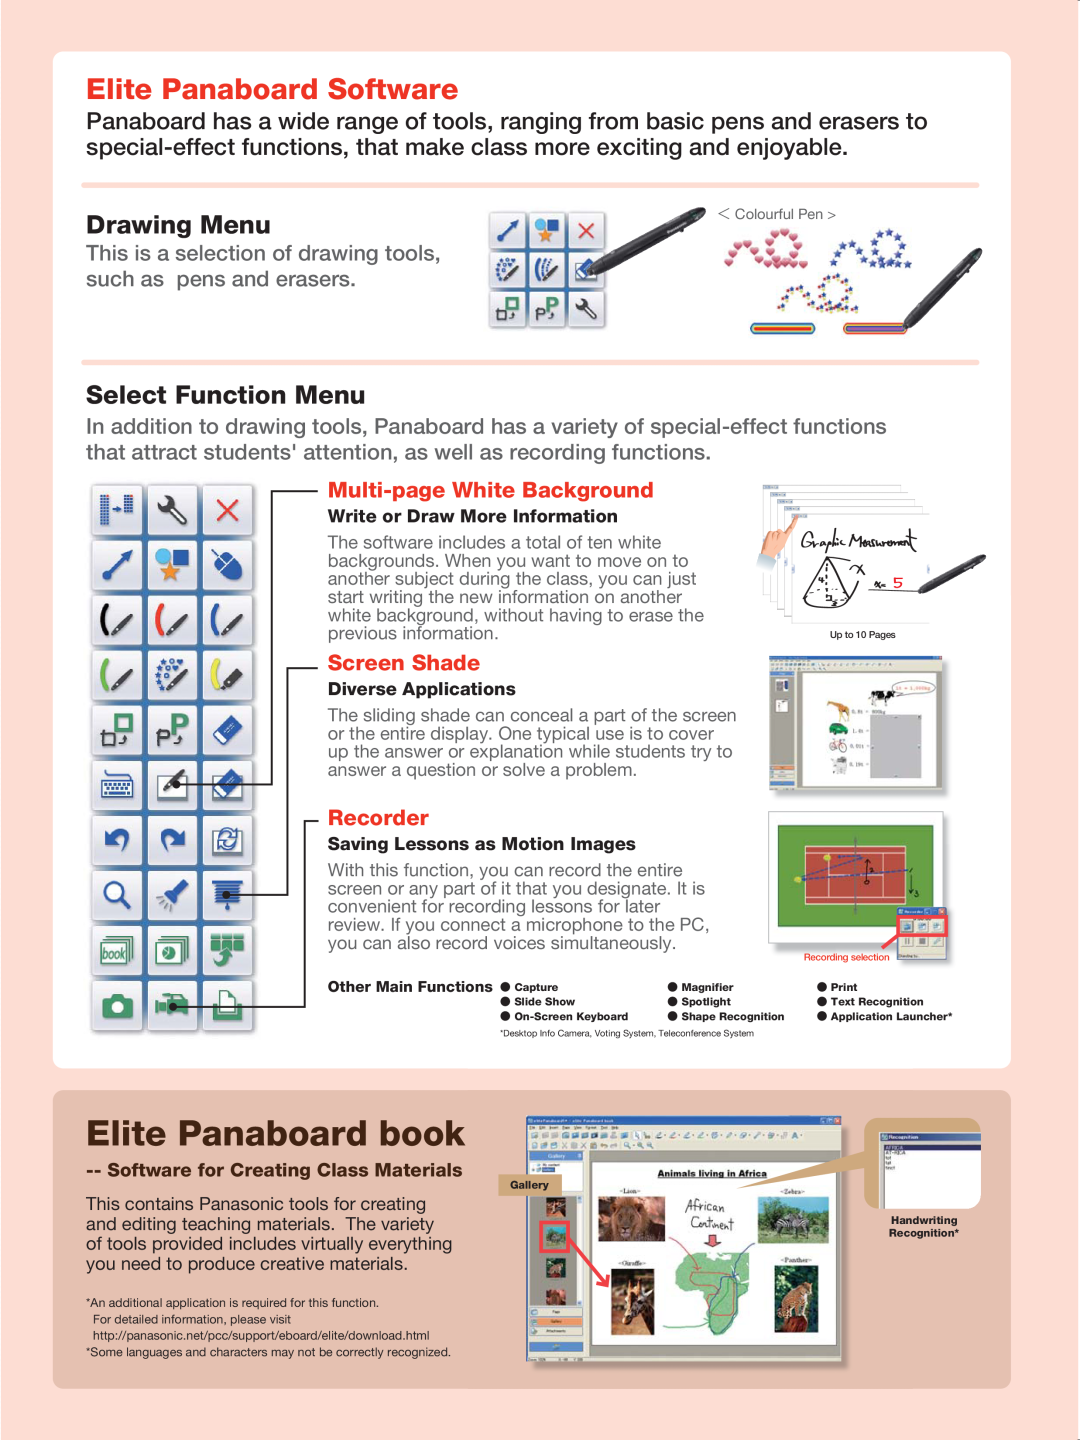 Panasonic UB-T880W manual Elite Panaboard book, Elite Panaboard Software, Drawing Menu, Select Function Menu, Screen Shade 